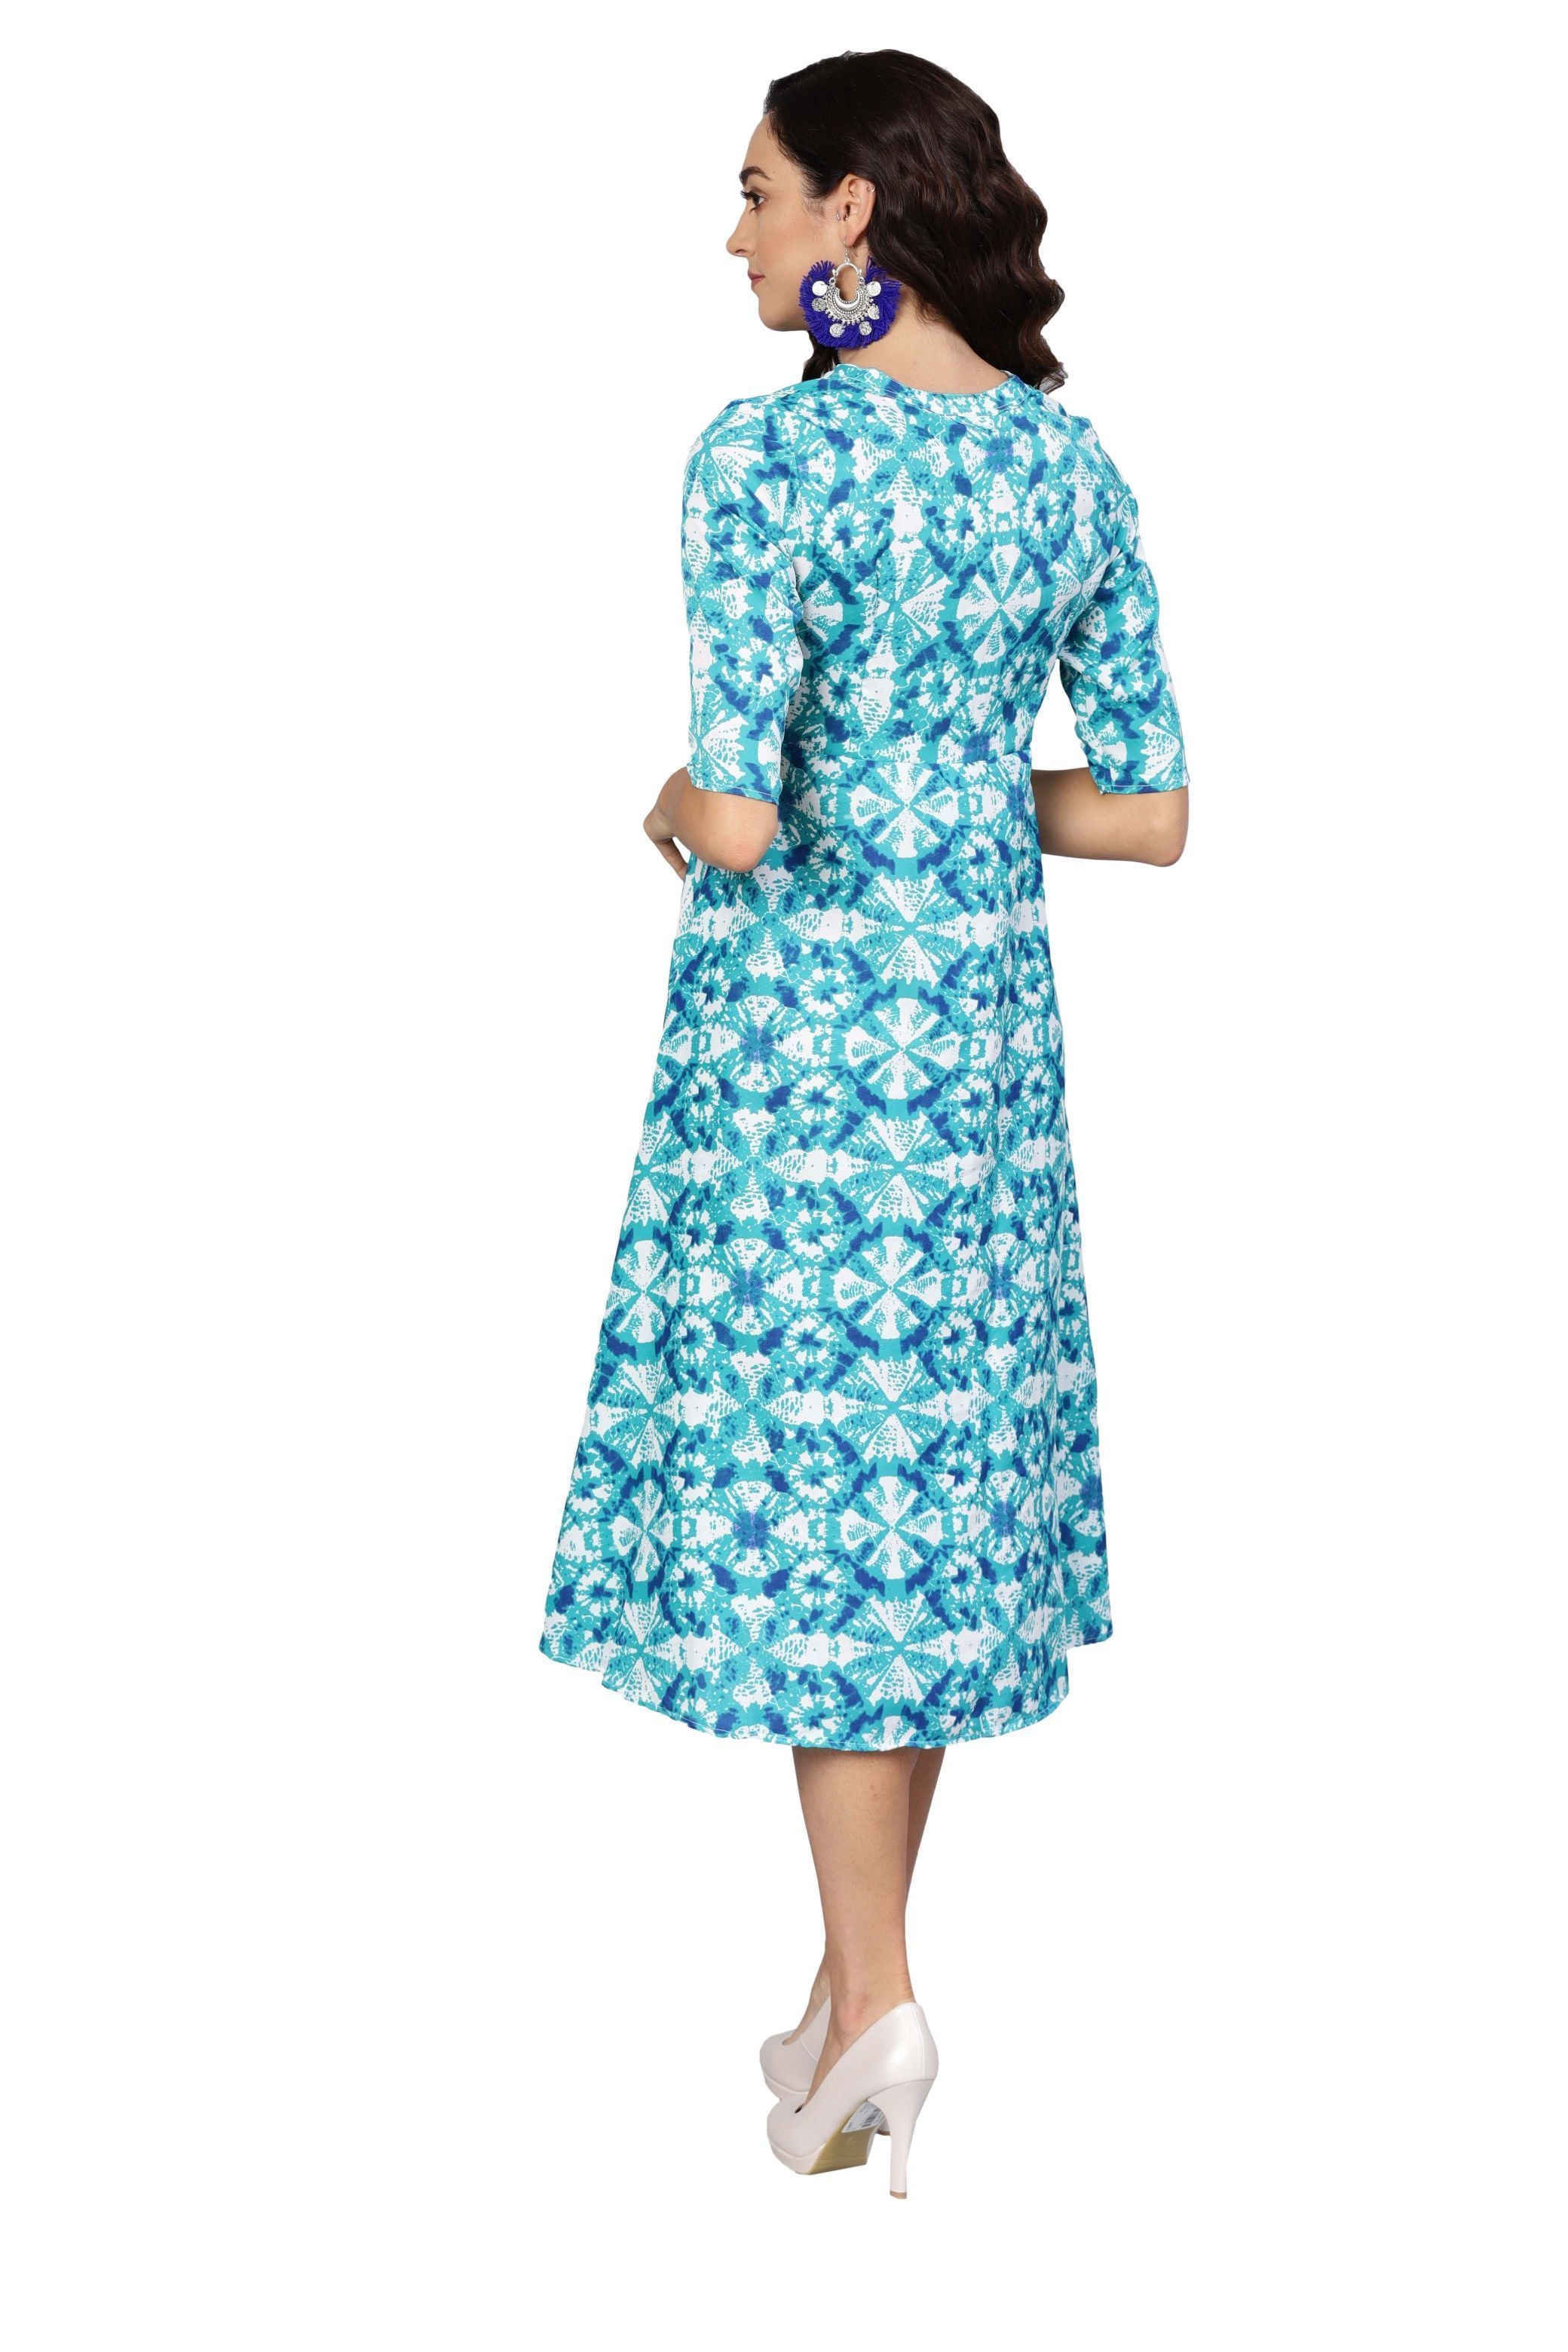 Women's Blue Crepe Printed Short Sleeve Collar Neck Dress - Myshka